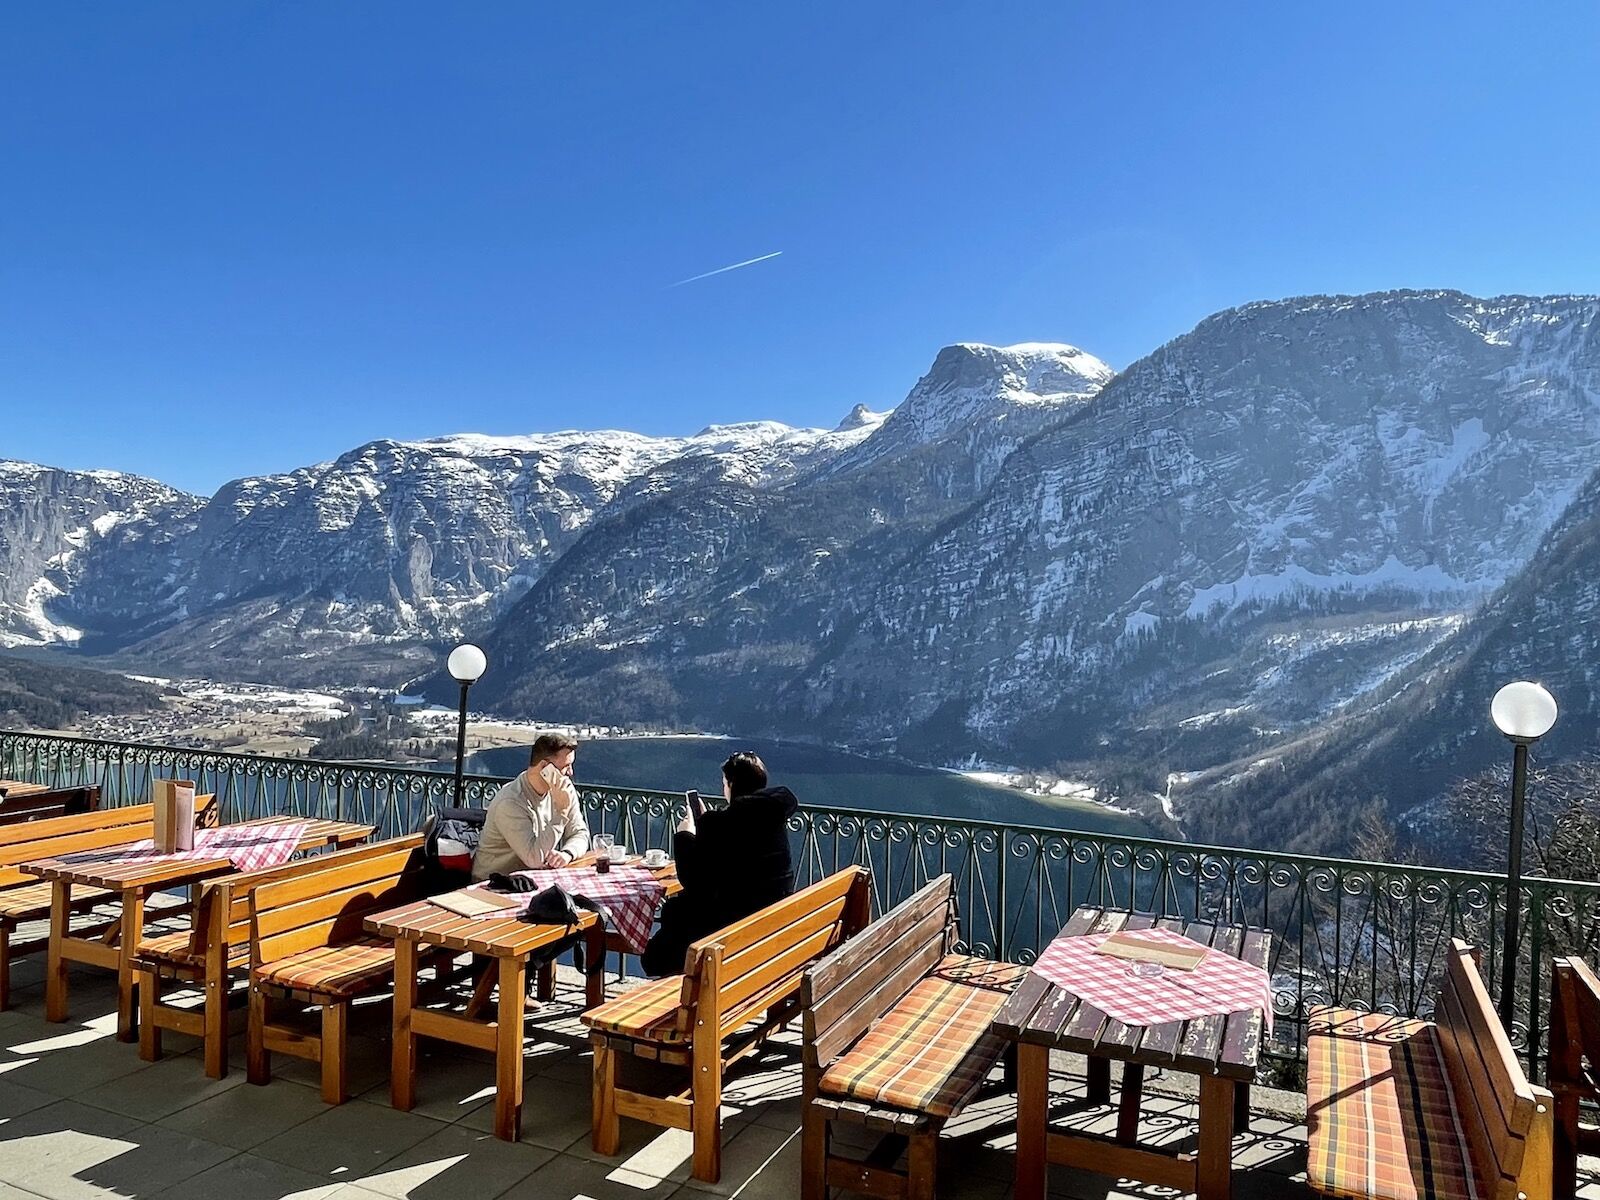 halltstatt austria - mountain top coffee shop